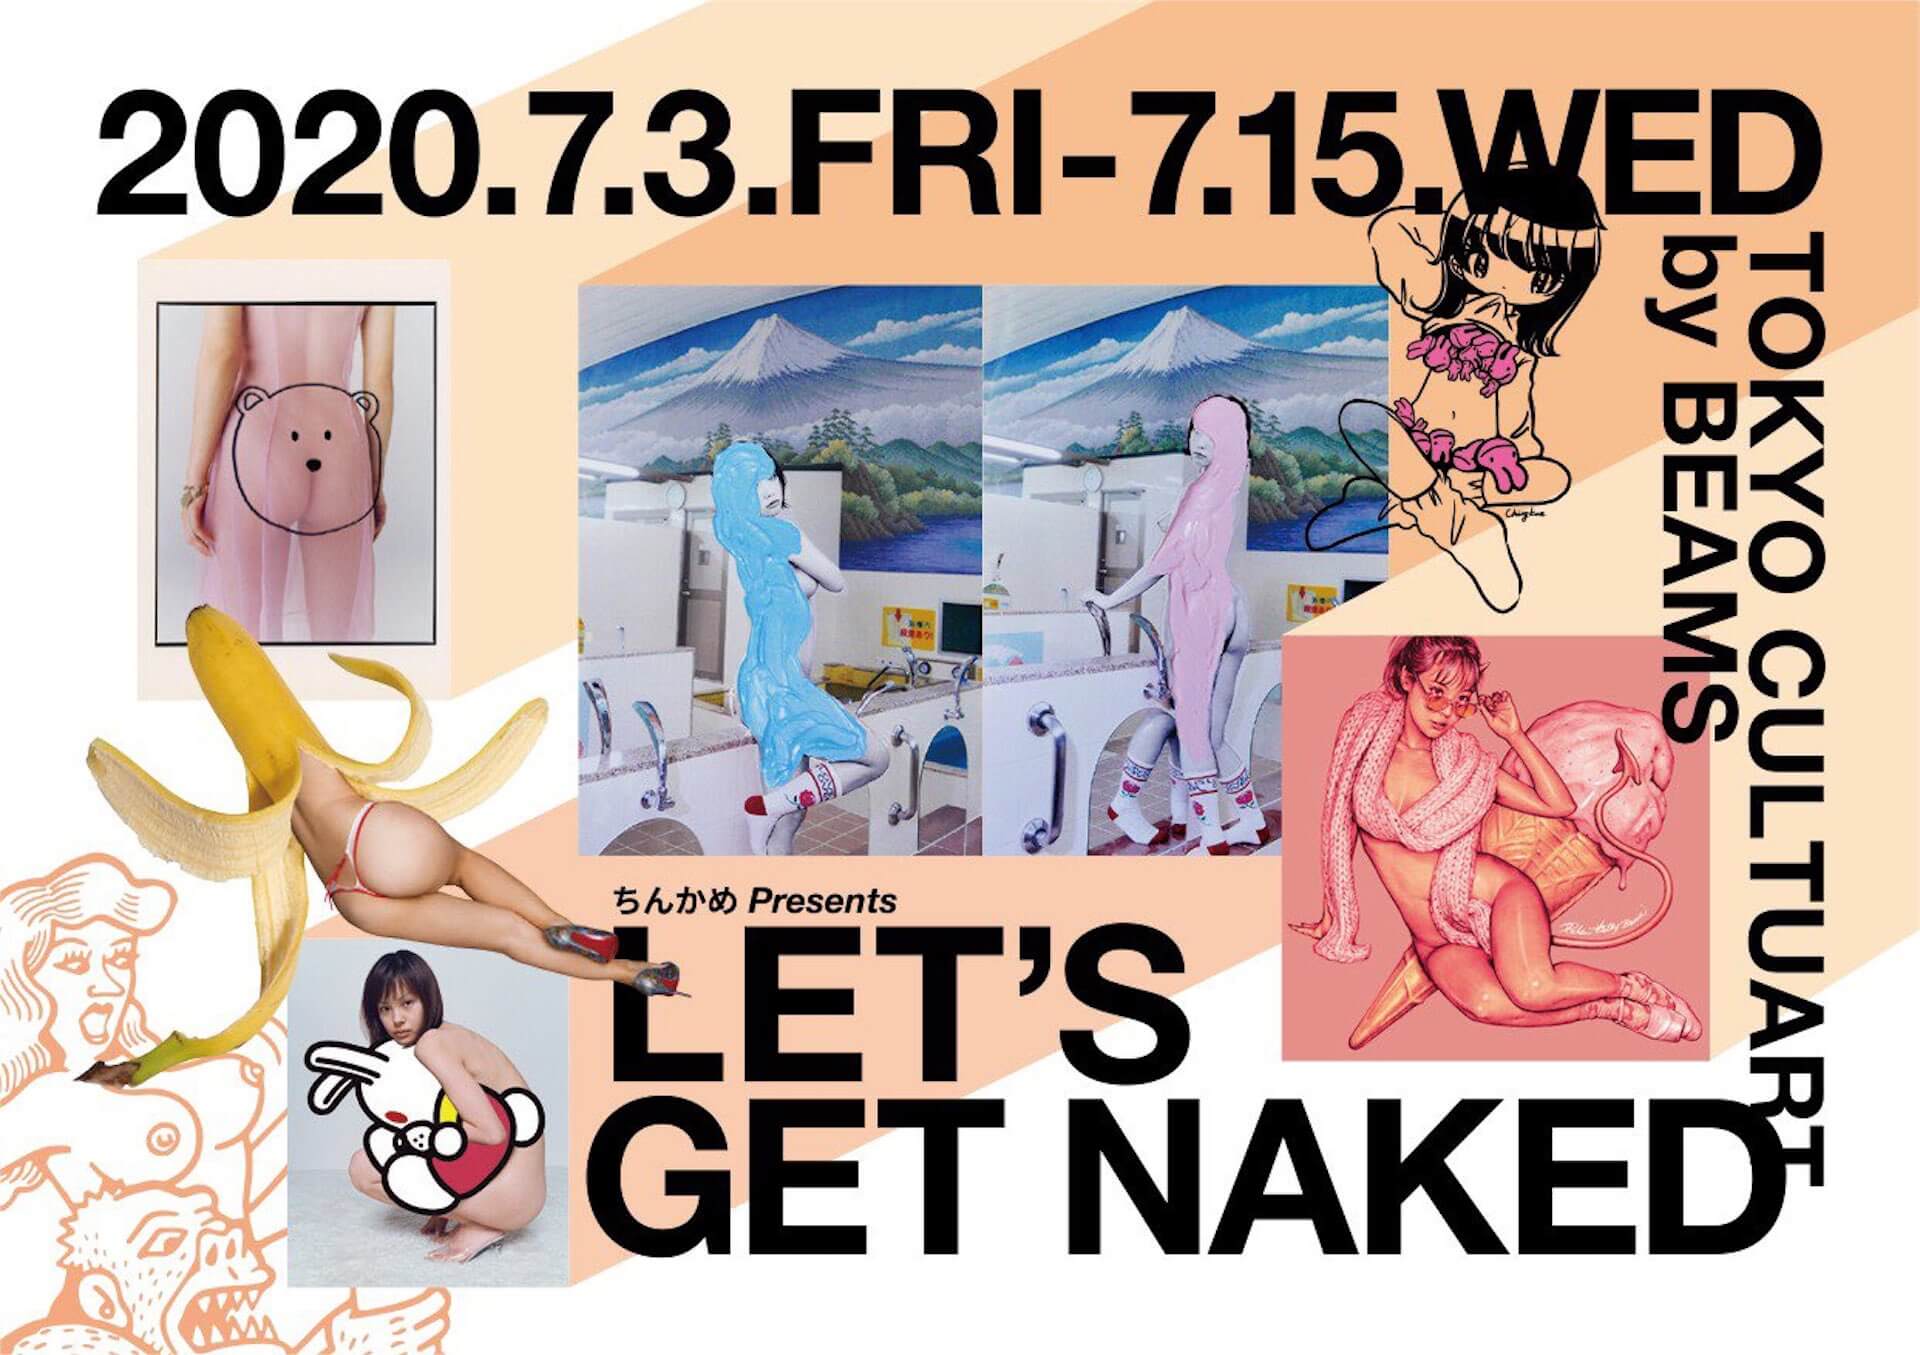 MANKEY＆SEX YamaguchiによるMIX CD『S.E.X.M.A.N.』にキケンなウワサ──『ちんかめ』内藤啓介キュレートの展示＜Let’s get naked＞が開催中 music200703-letsgetnaked-mankey-sexyamaguchi-1